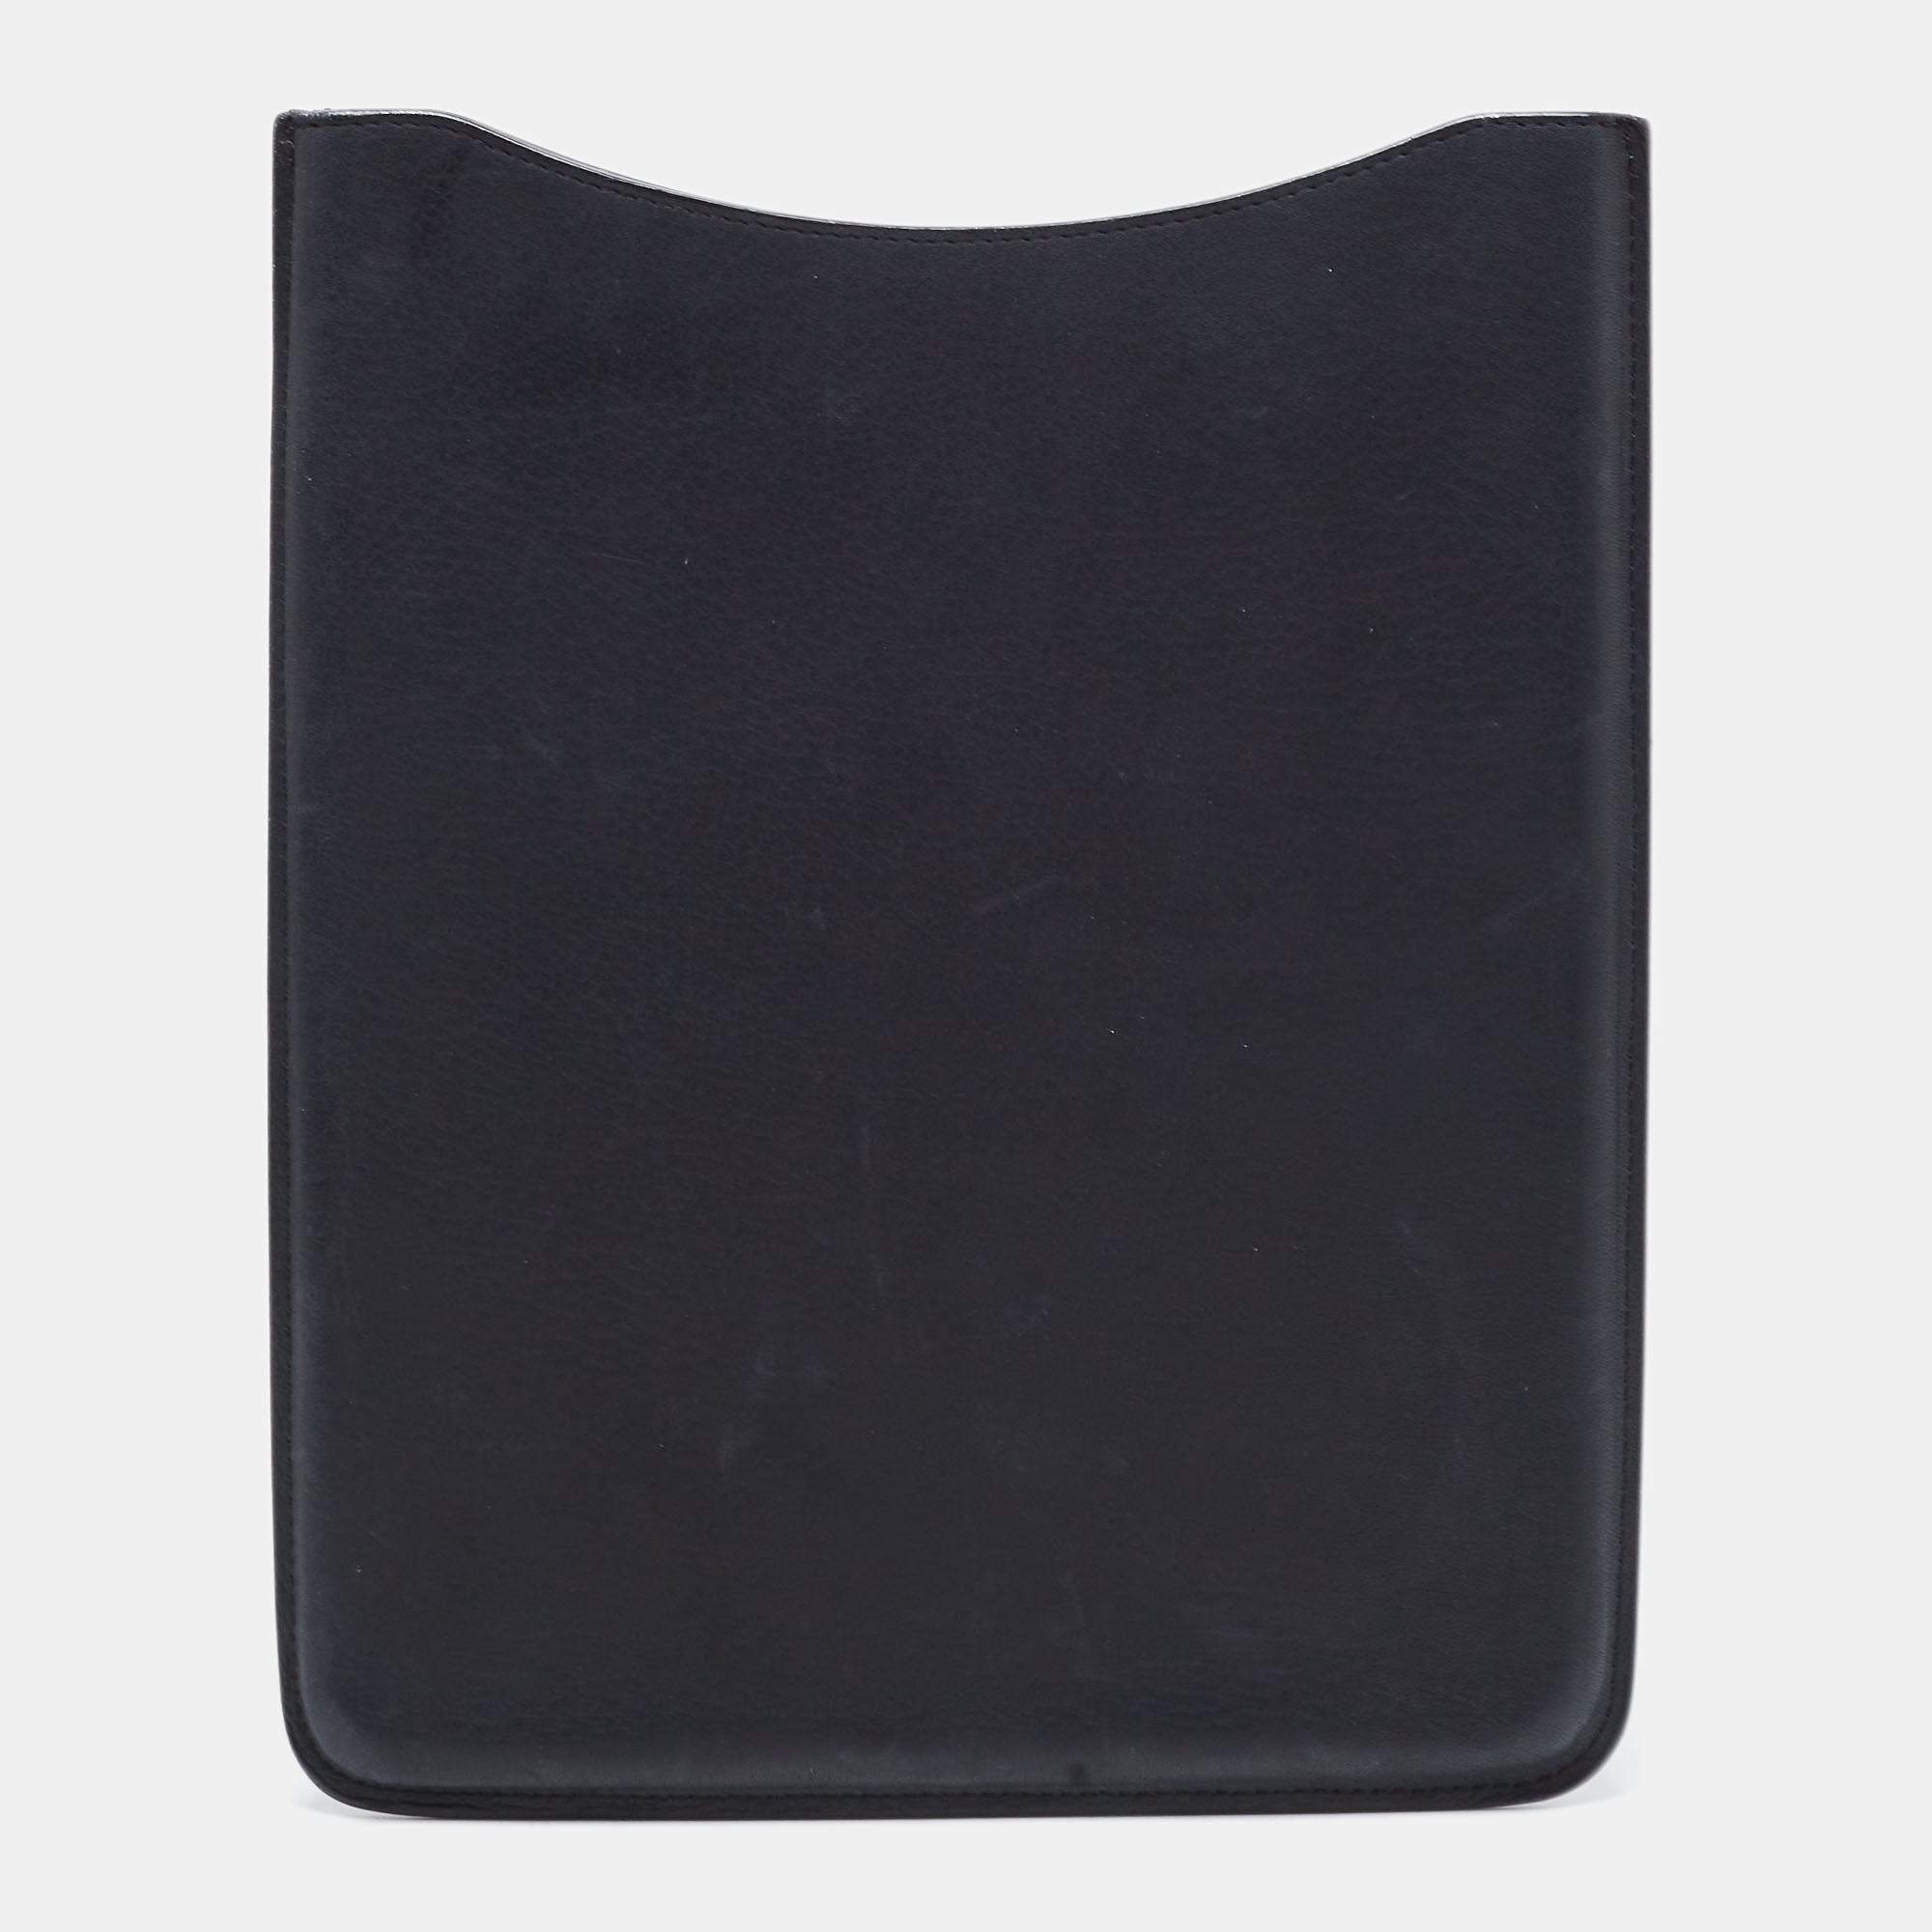 

Chanel Black Leather Logo Ipad Mini Case